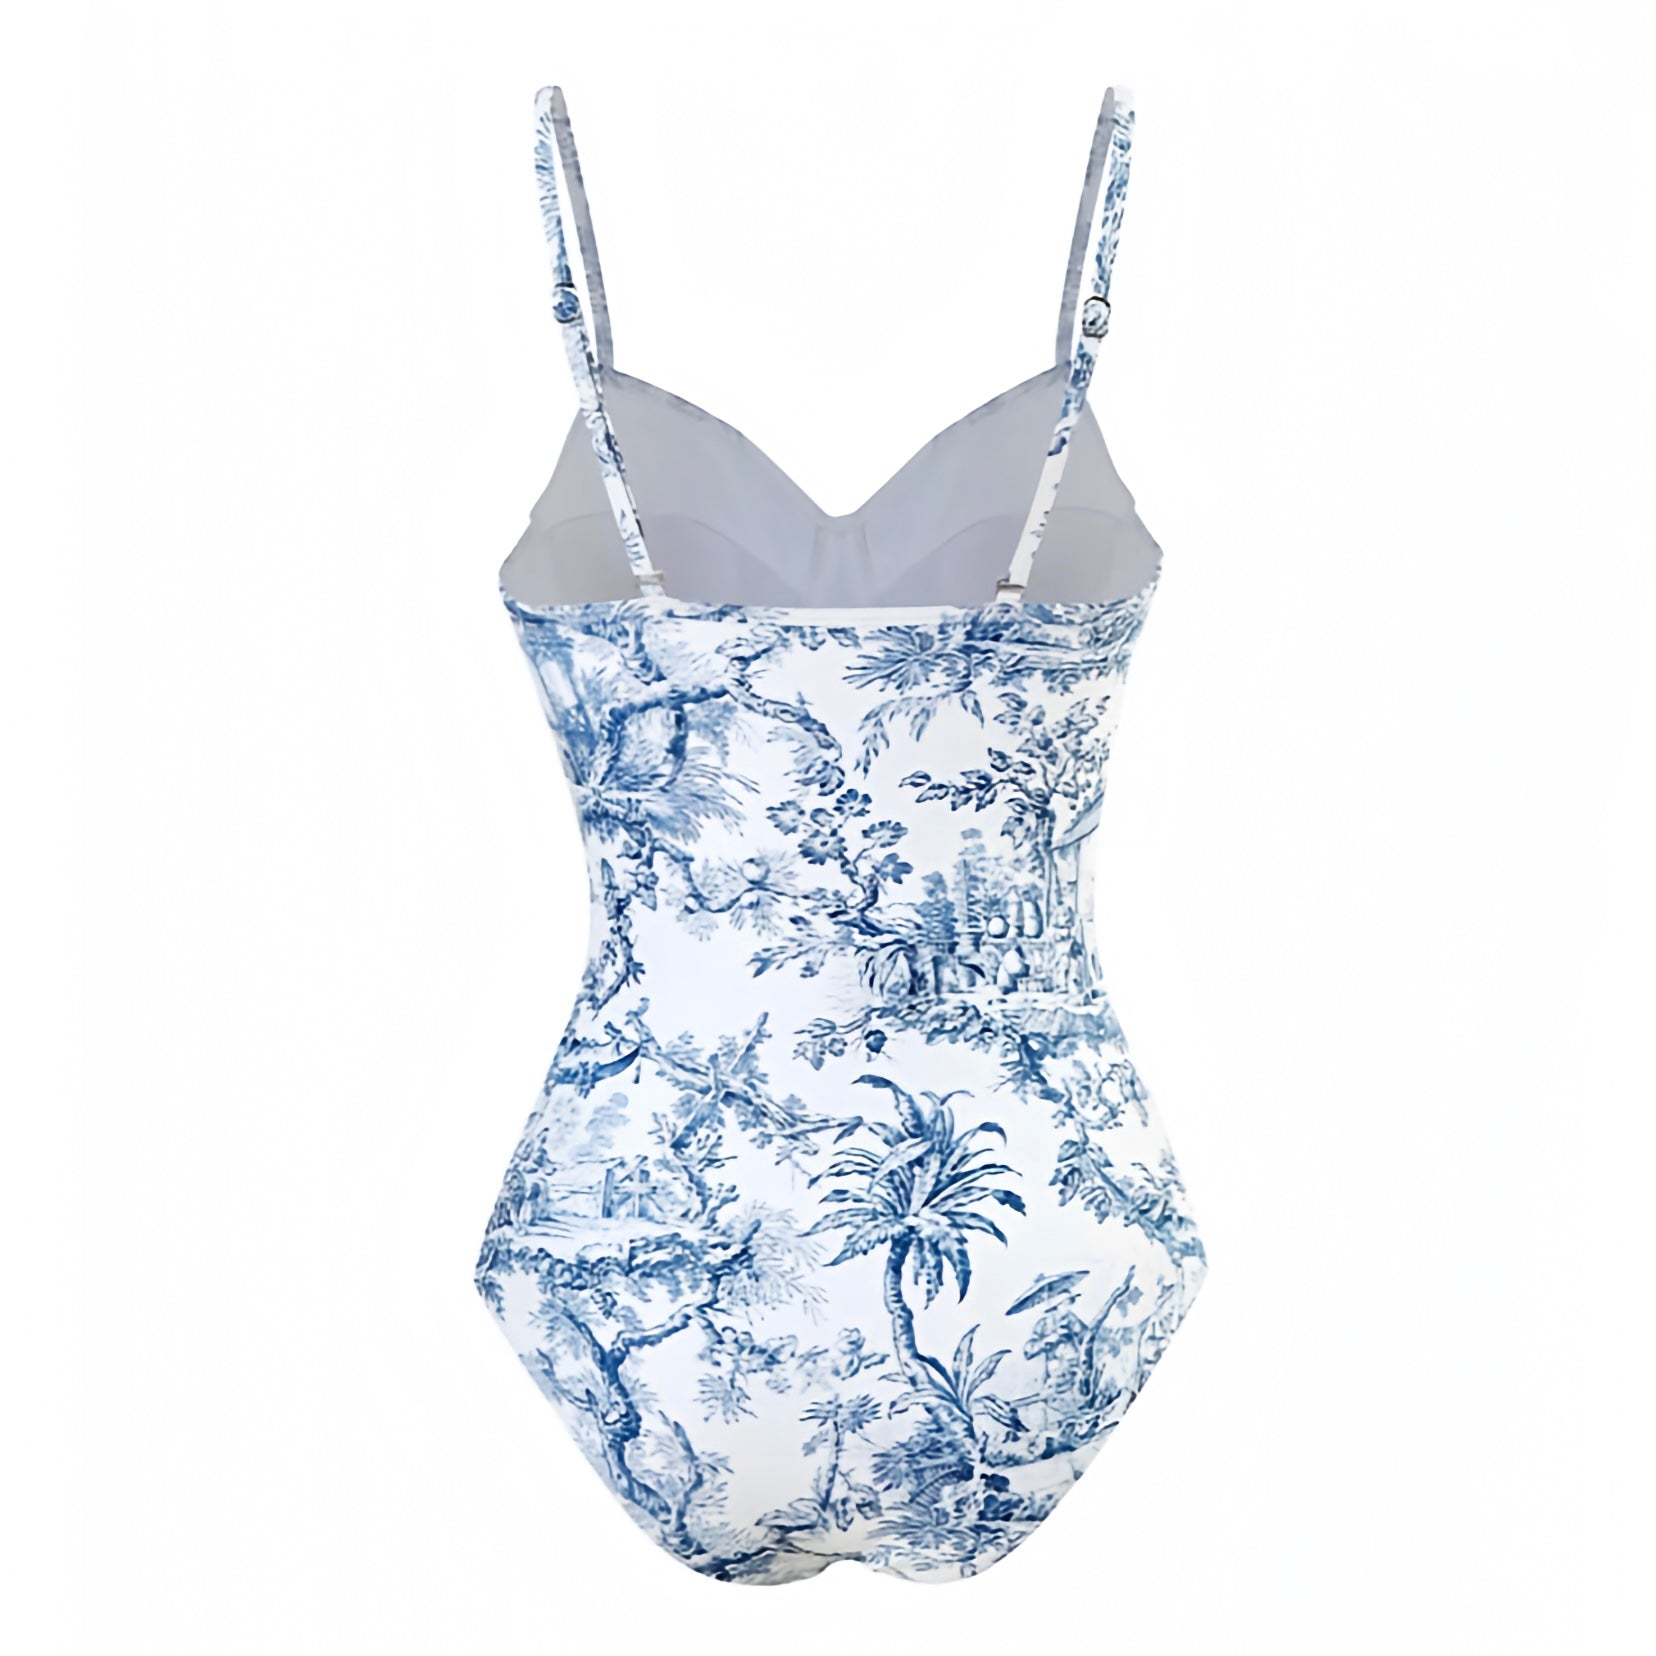 floral-print-blue-and-white-flower-patterned-slim-fit-bodycon-sweetheart-neckline-spaghetti-strap-sleeveless-backless-open-back-underwire-push-up-cheeky-thong-boho-bohemian-modest-one-piece-swimsuit-swimwear-bathing-suit-women-ladies-teens-tweens-chic-trendy-spring-2024-summer-elegant-classic-classy-feminine-preppy-style-tropical-european-greece-vacation-coastal-granddaughter-grandmillennial-mamma-mia-beach-wear-revolve-loveshackfancy-roller-rabbit-minow-frankies-bikinis-blackbough-kulakinis-dupe